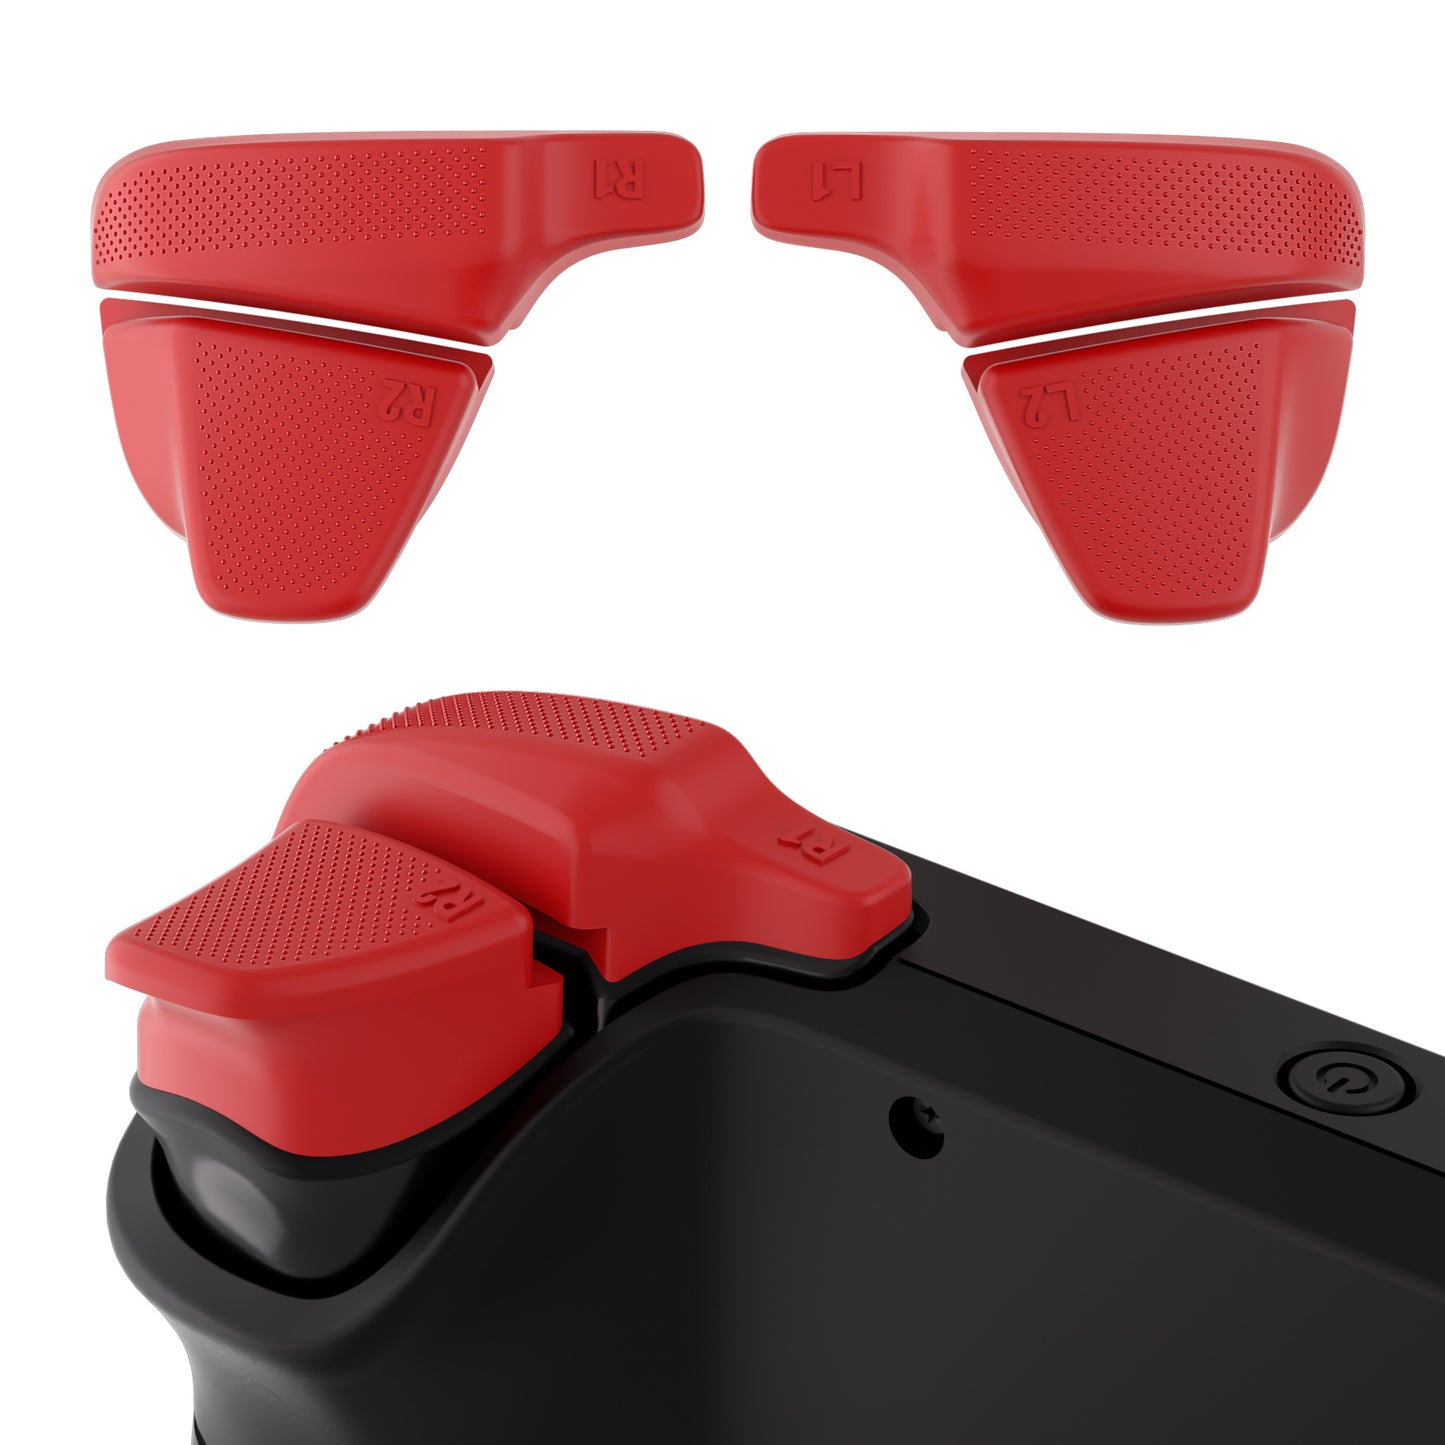 PlayVital LR INCREASER Shoulder Buttons Trigger Enhancement Set for Steam Deck - Passion Red - DJMSDJ004 PlayVital